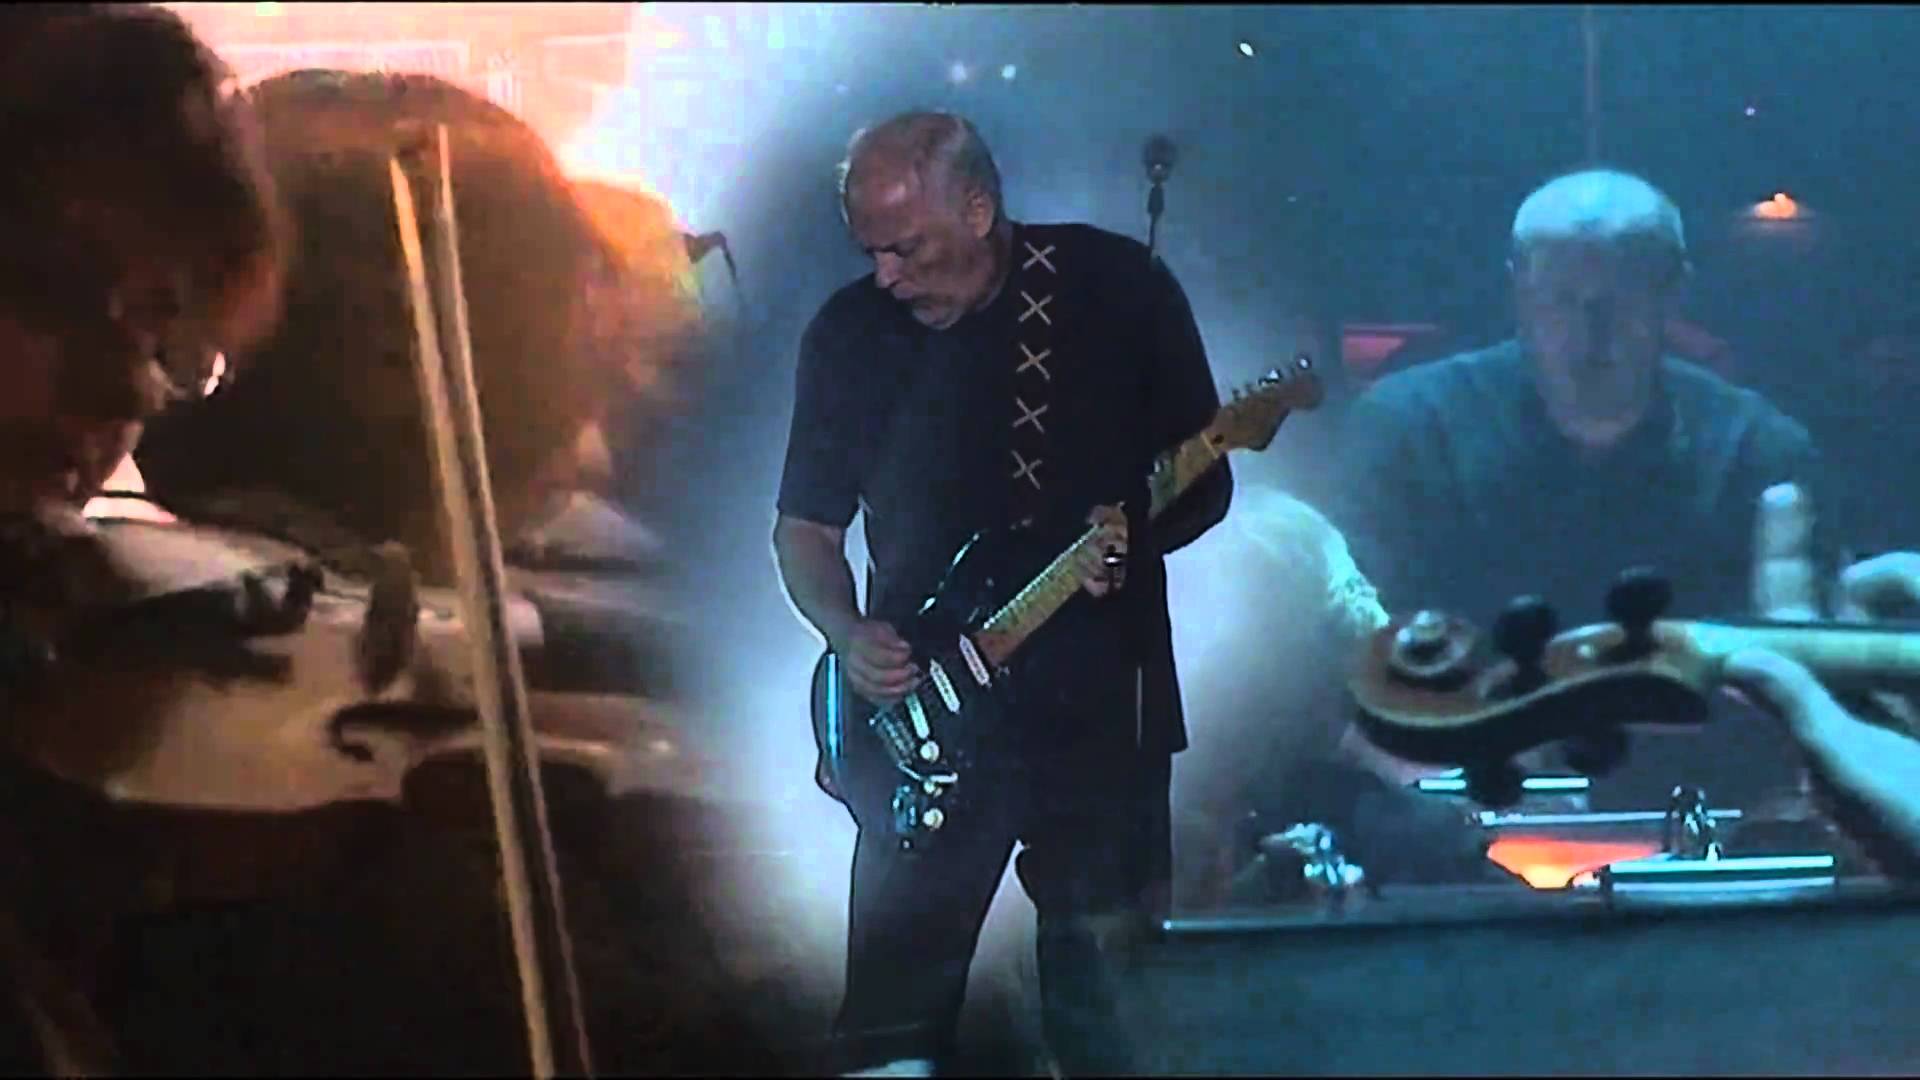 David Gilmour Tickets